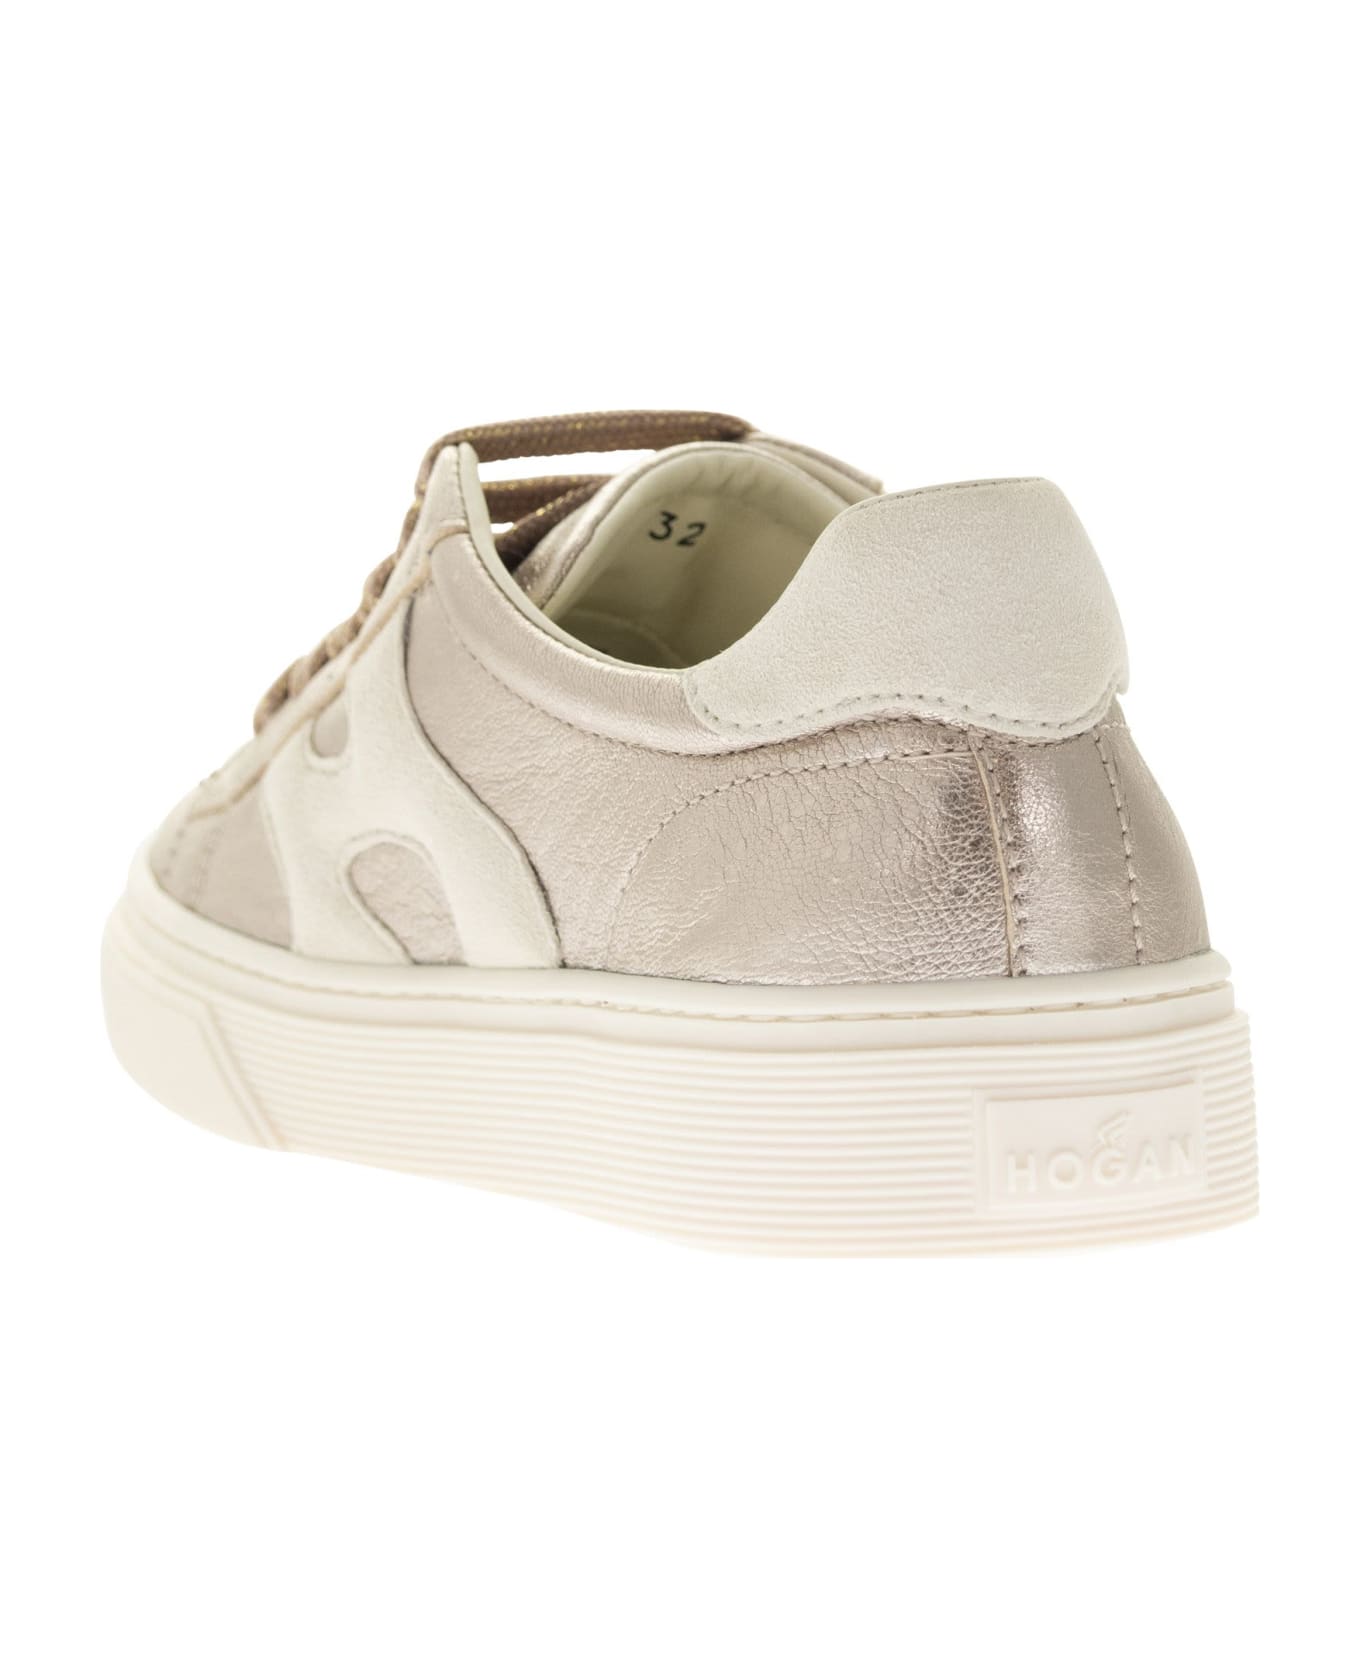 Hogan J340 - Sneakers - Pink/gold